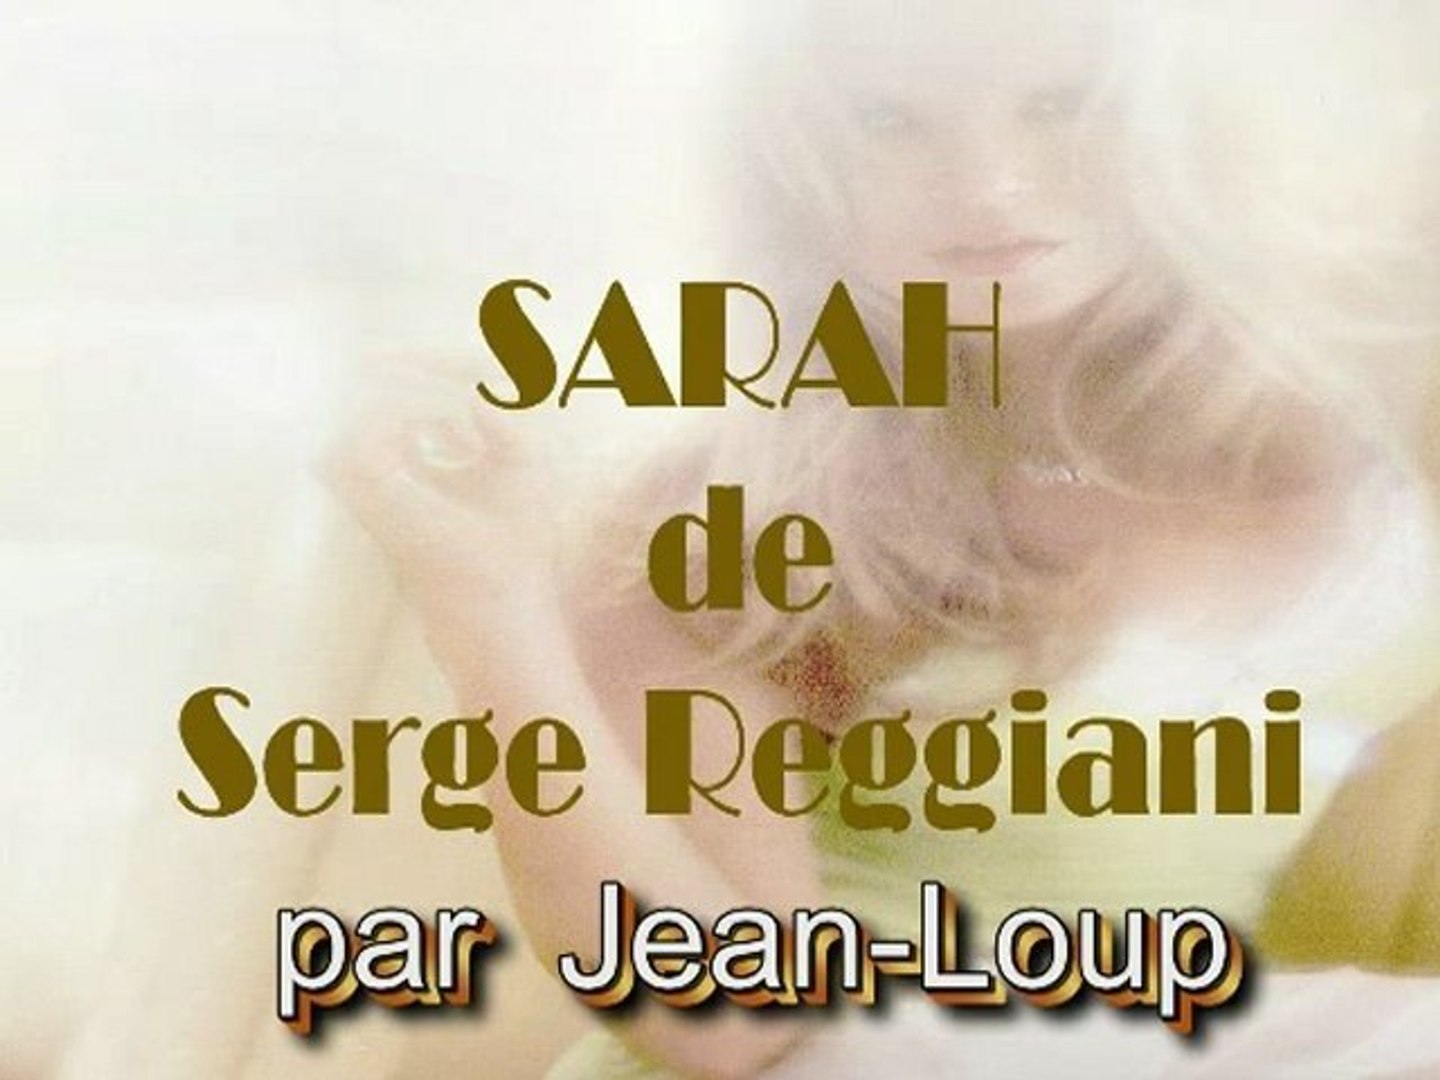 Sarah de Serge Reggiani par Jean-Loup - Vidéo Dailymotion